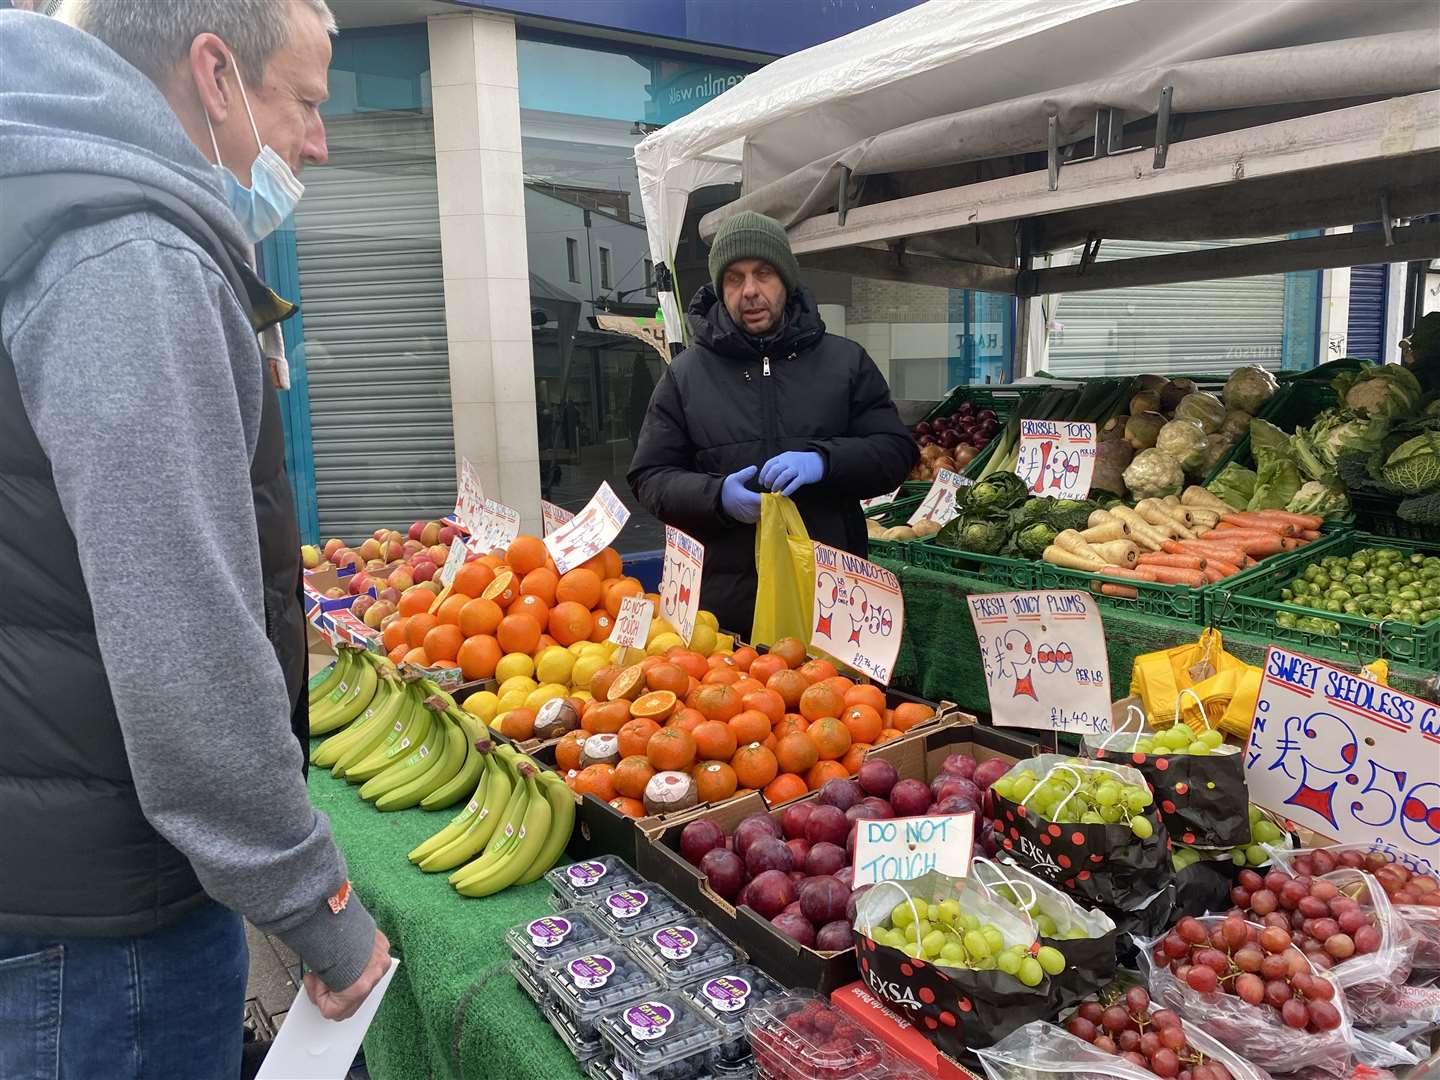 Kris Van Haeften trading at his fruit and veg stall on Week Street